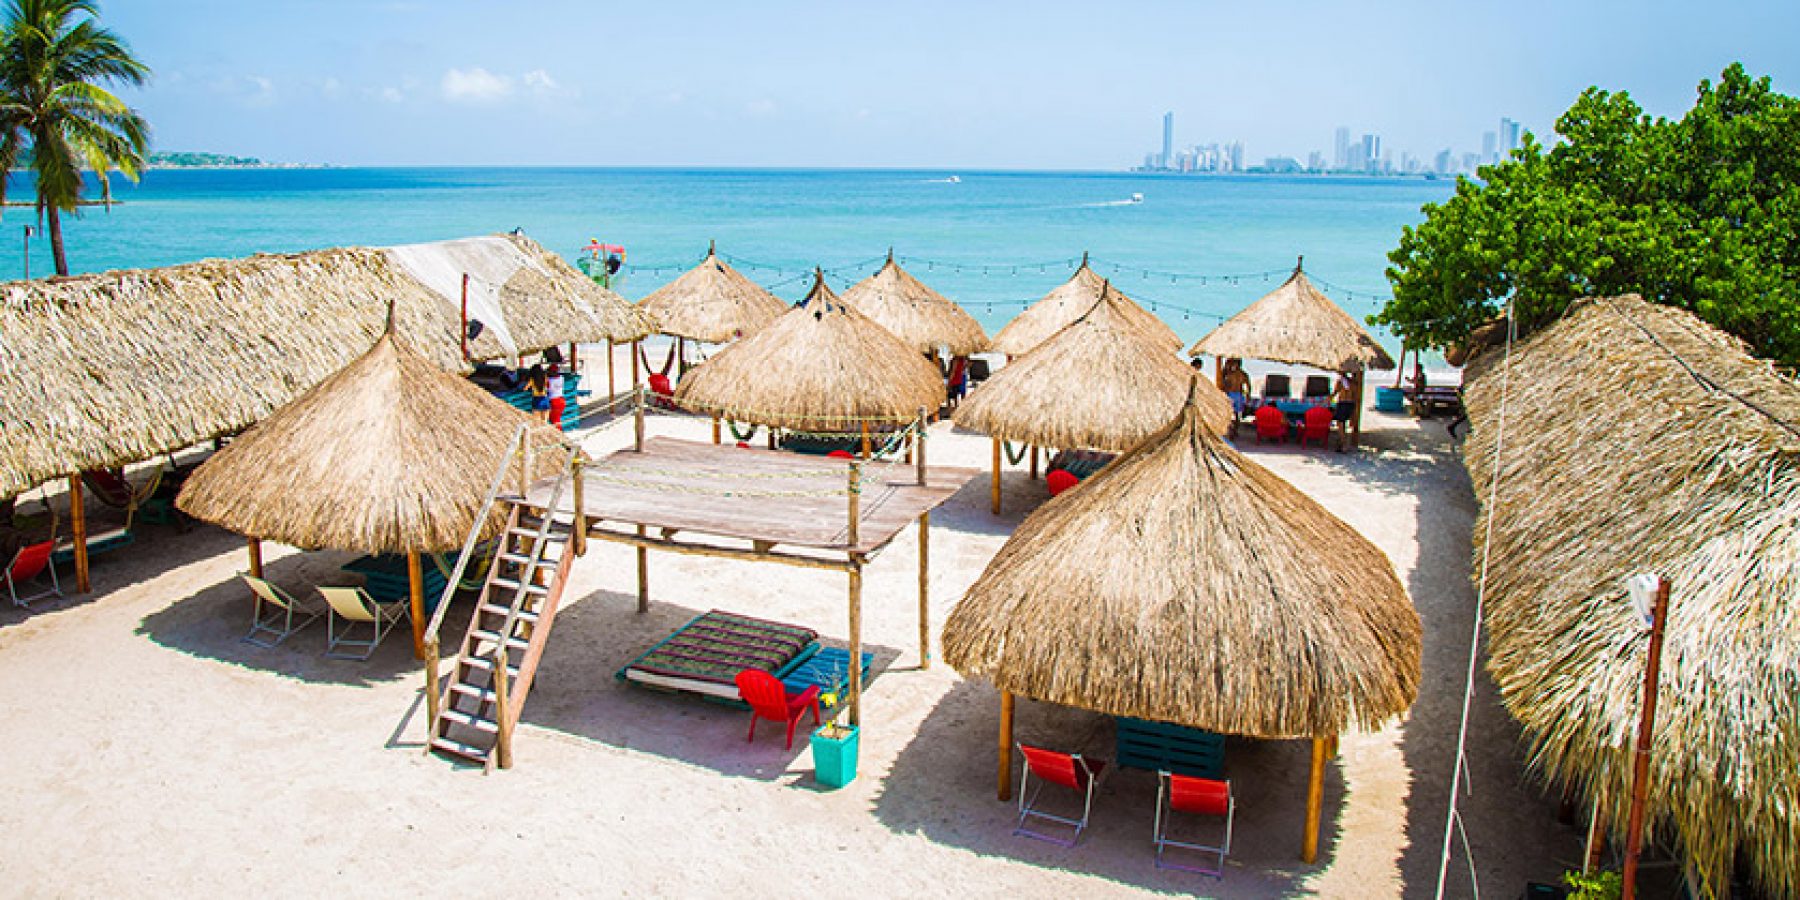 Best Sunbathing Beach - Beach Club - Bomba Beach Club